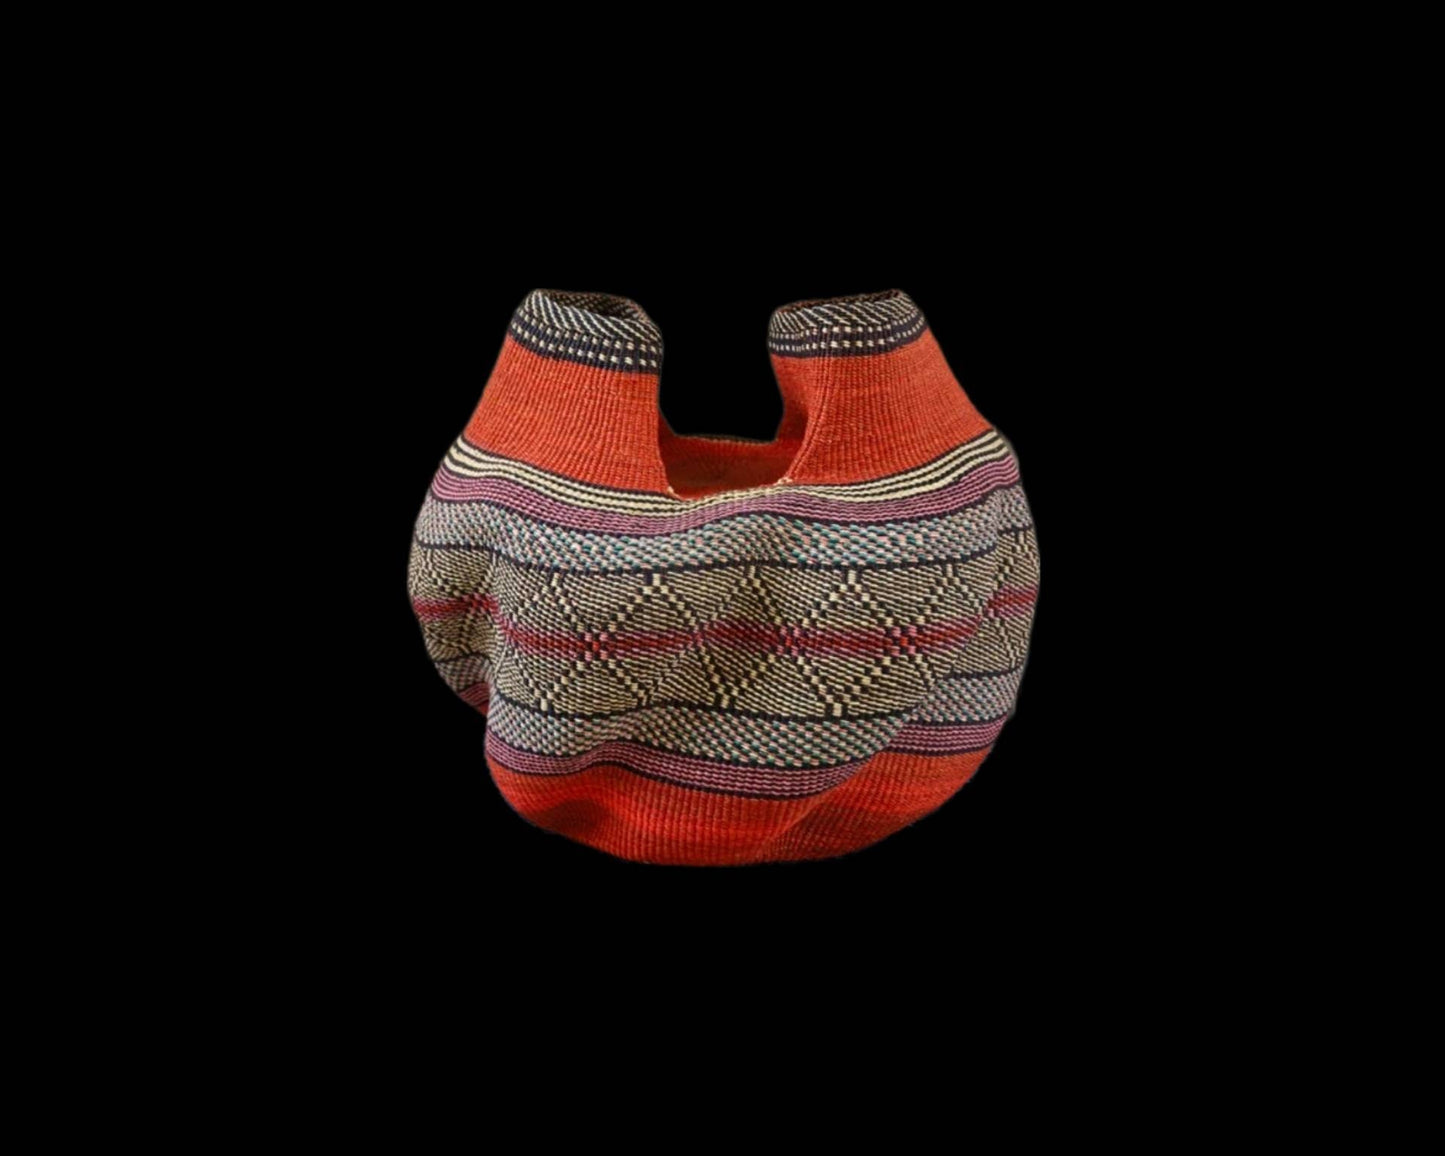 Bolga Basket, Two Heads are Better than One, Bassaba Pot Basket, Flower Pot 003